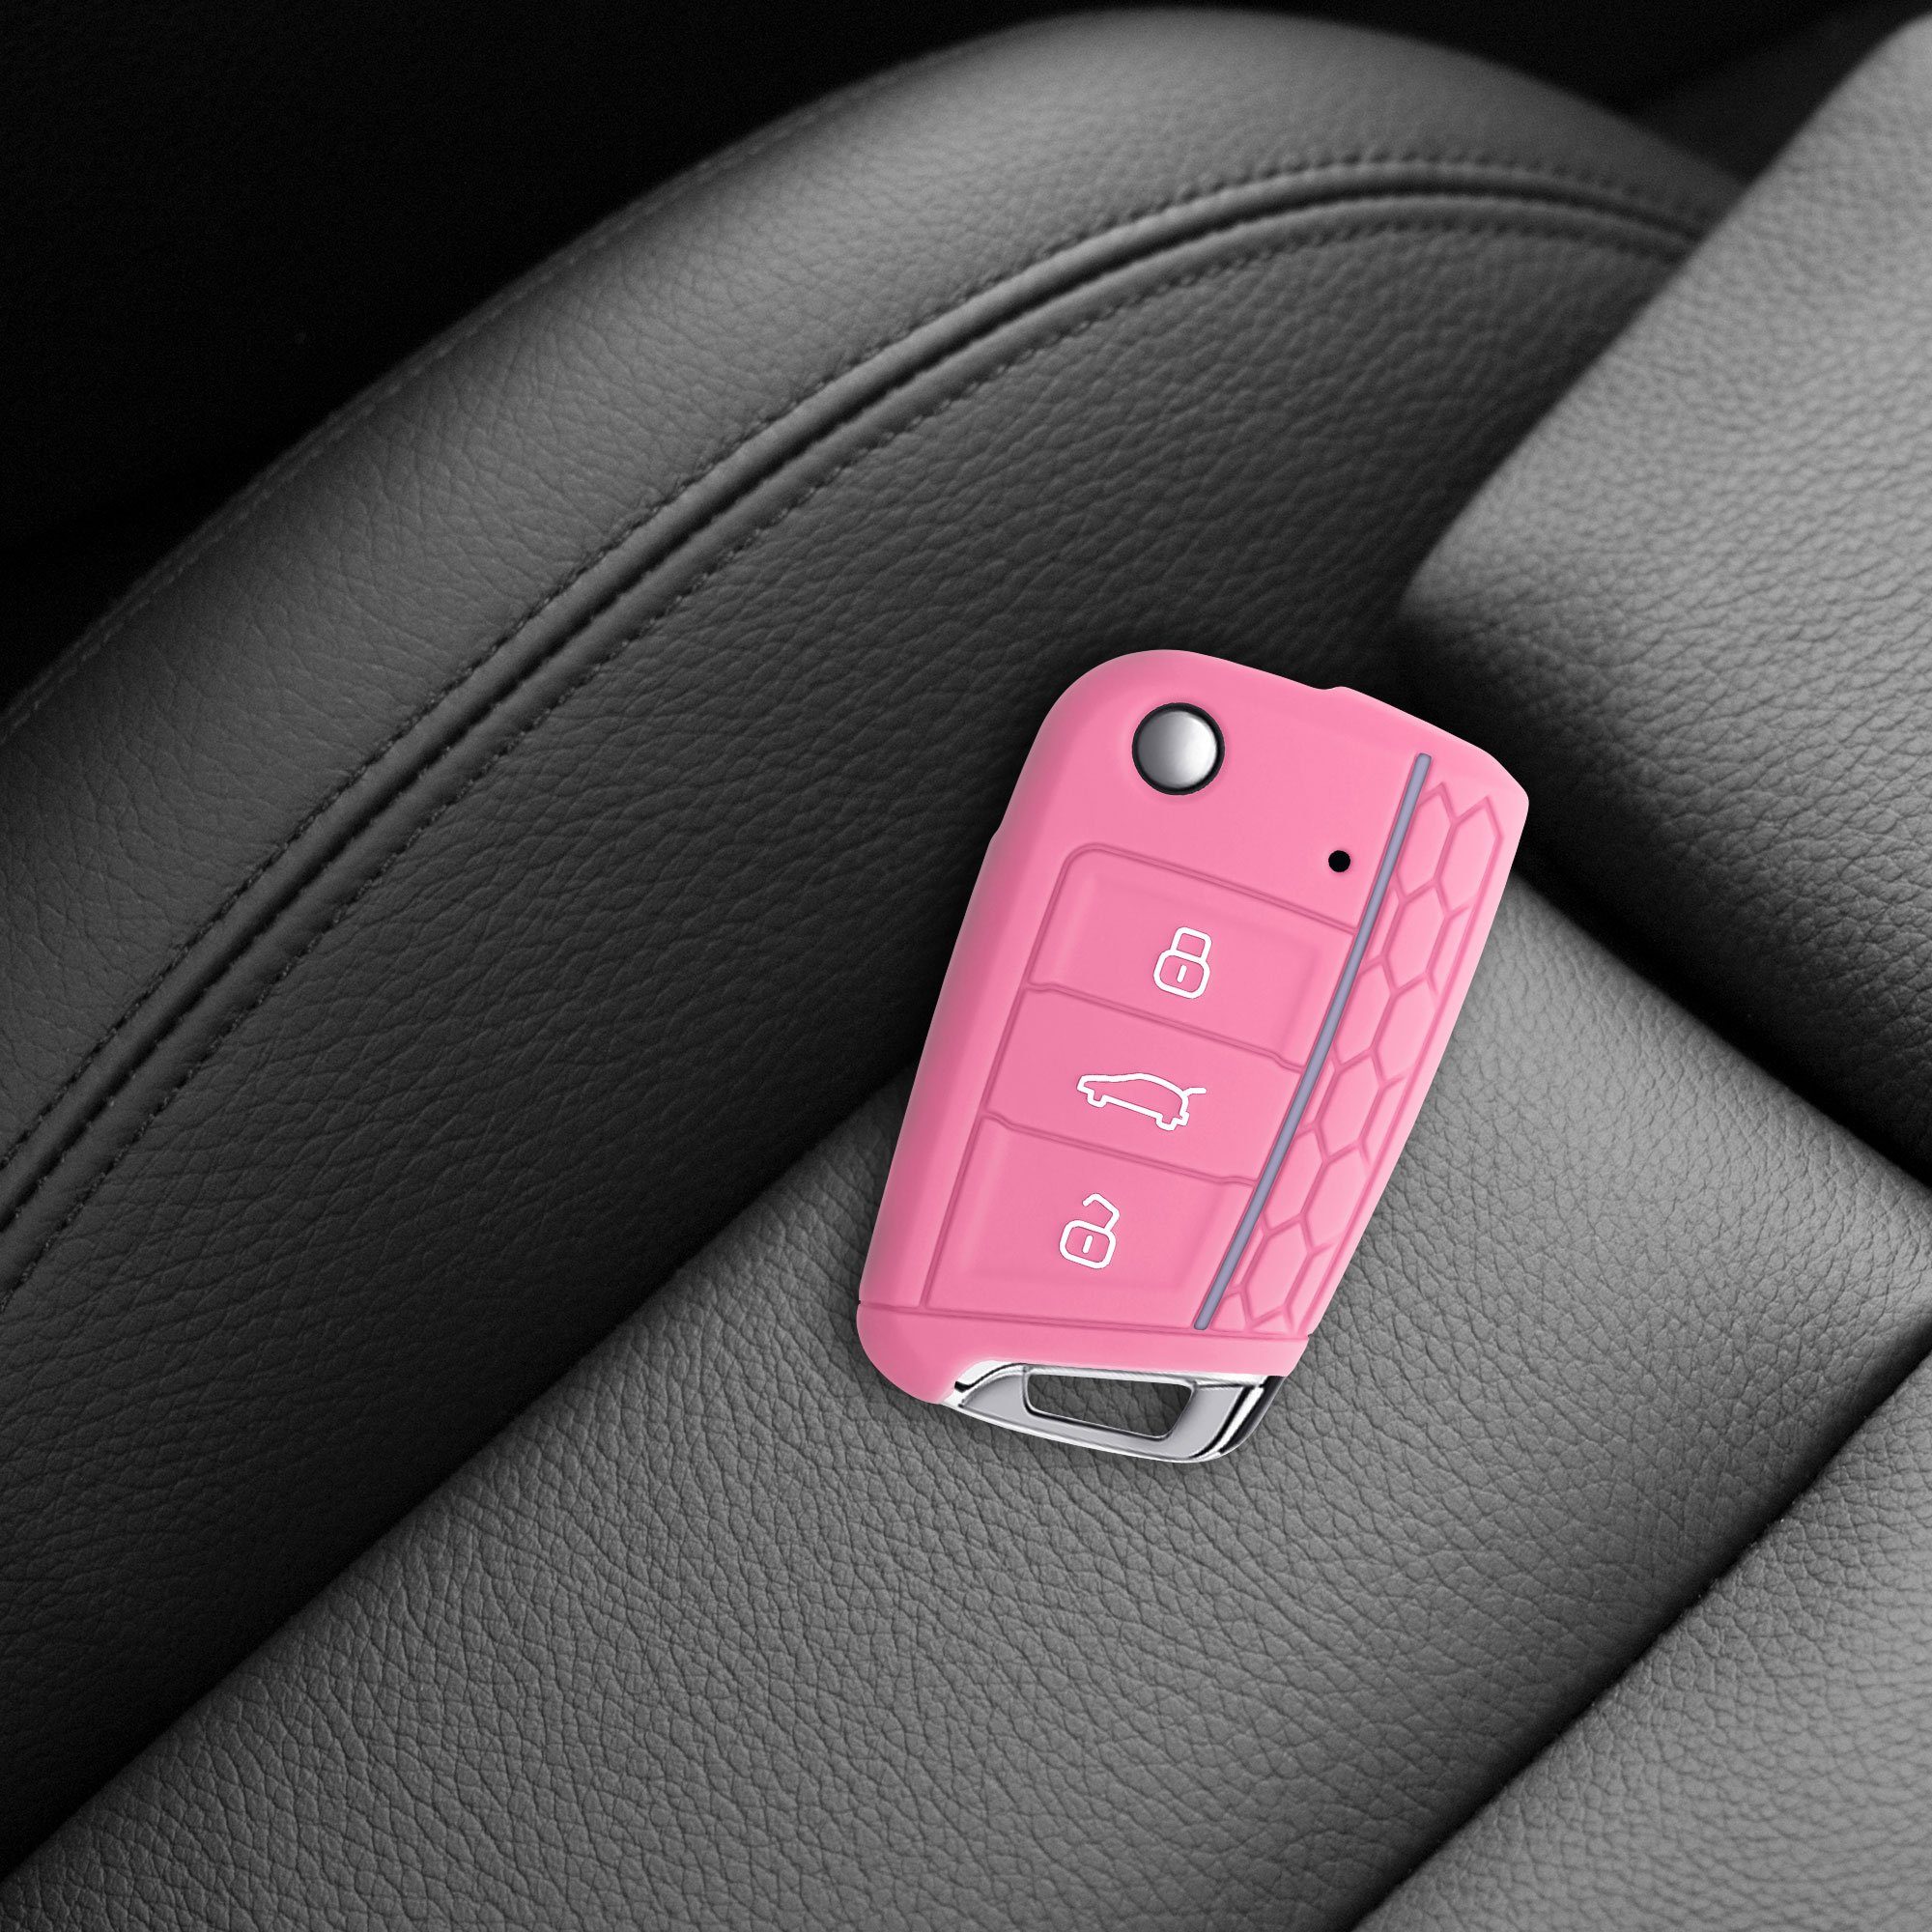 Golf MK7, Hülle Schlüsselhülle Silikon 7 kwmobile Schlüssel Schlüsseltasche Case Cover VW Rosa-Pastelllila Autoschlüssel für